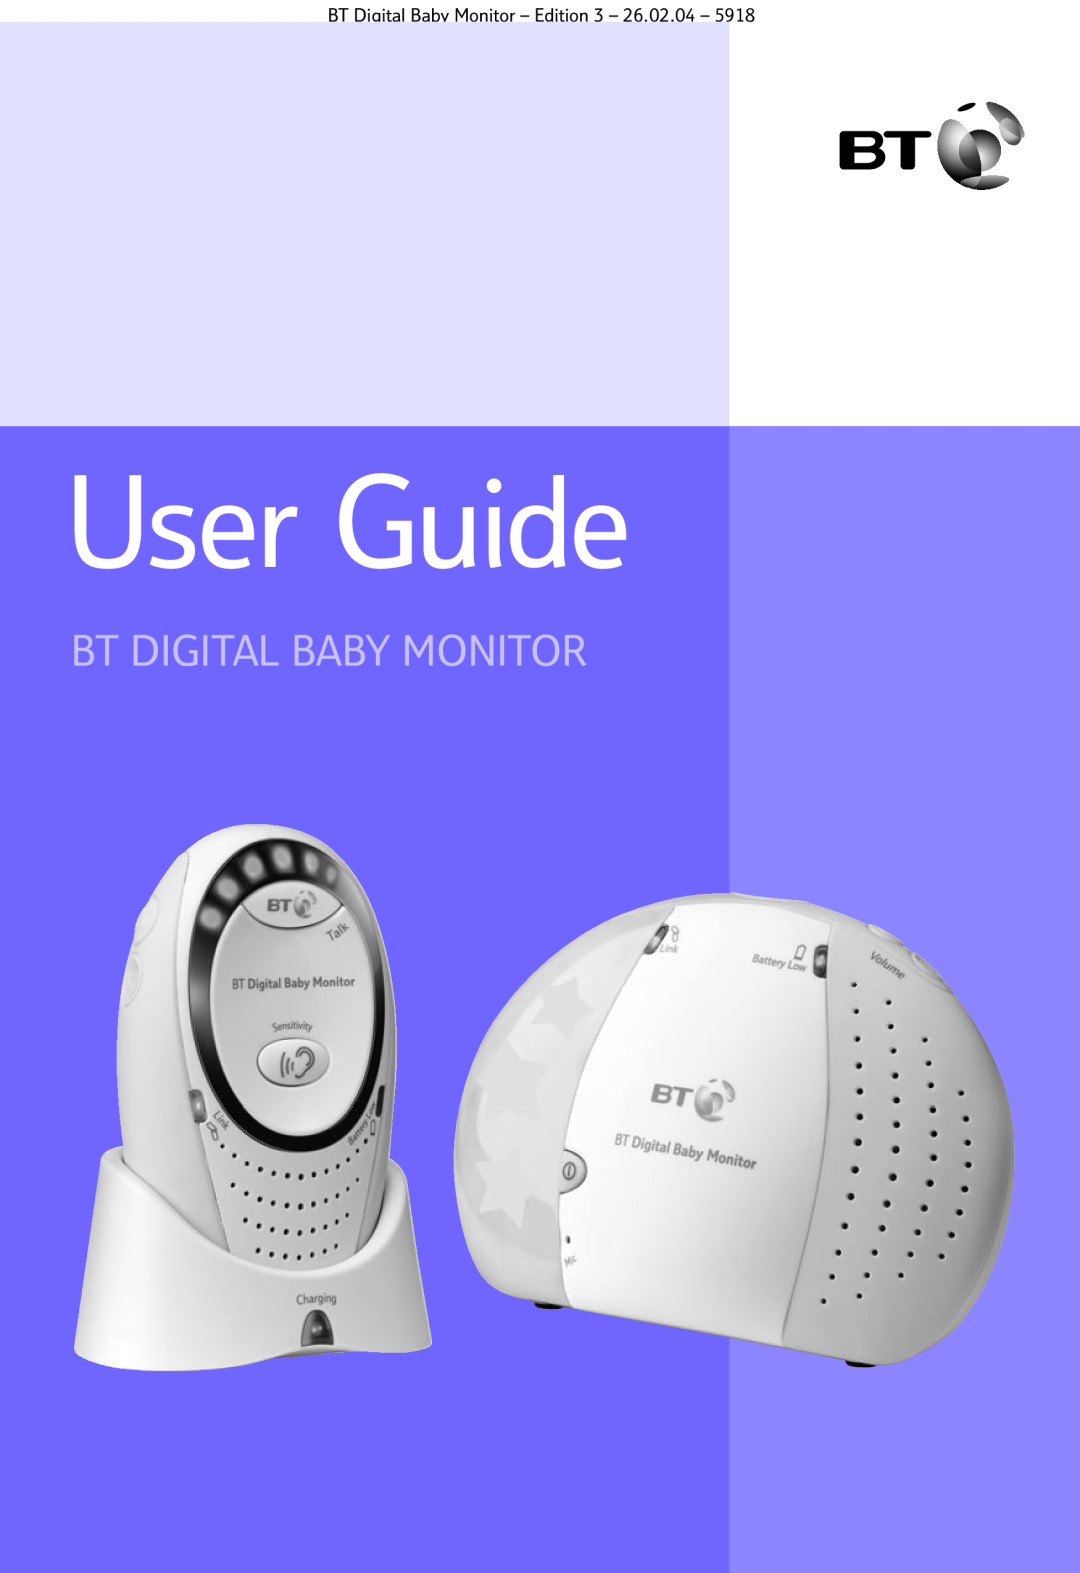 BT manual User Guide, Bt Digital Baby Monitor, BT Digital Baby Monitor - Edition 3 - 26.02.04 